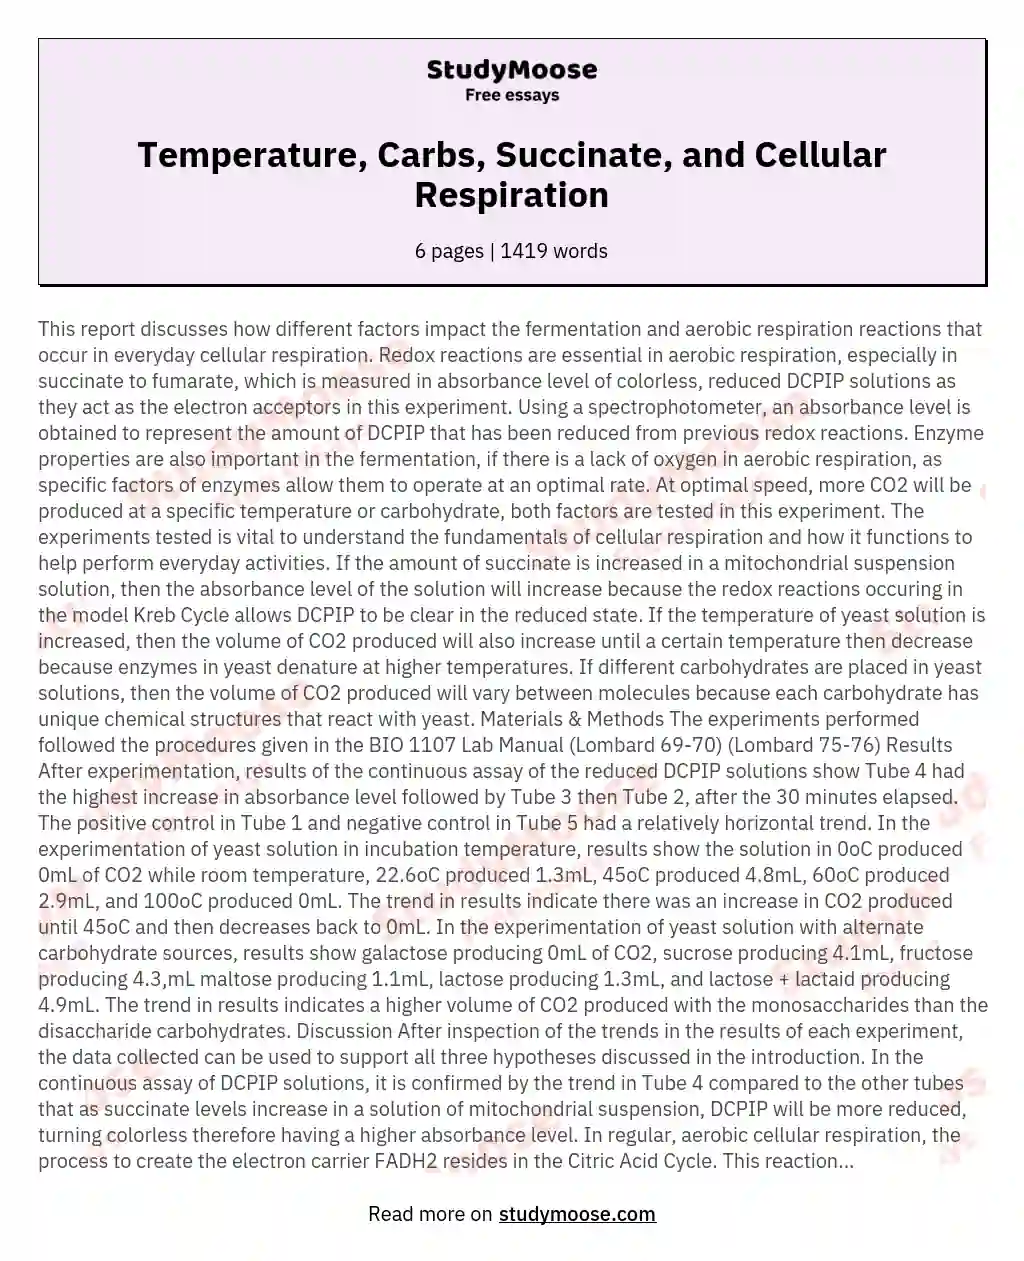 Temperature, Carbs, Succinate, and Cellular Respiration essay